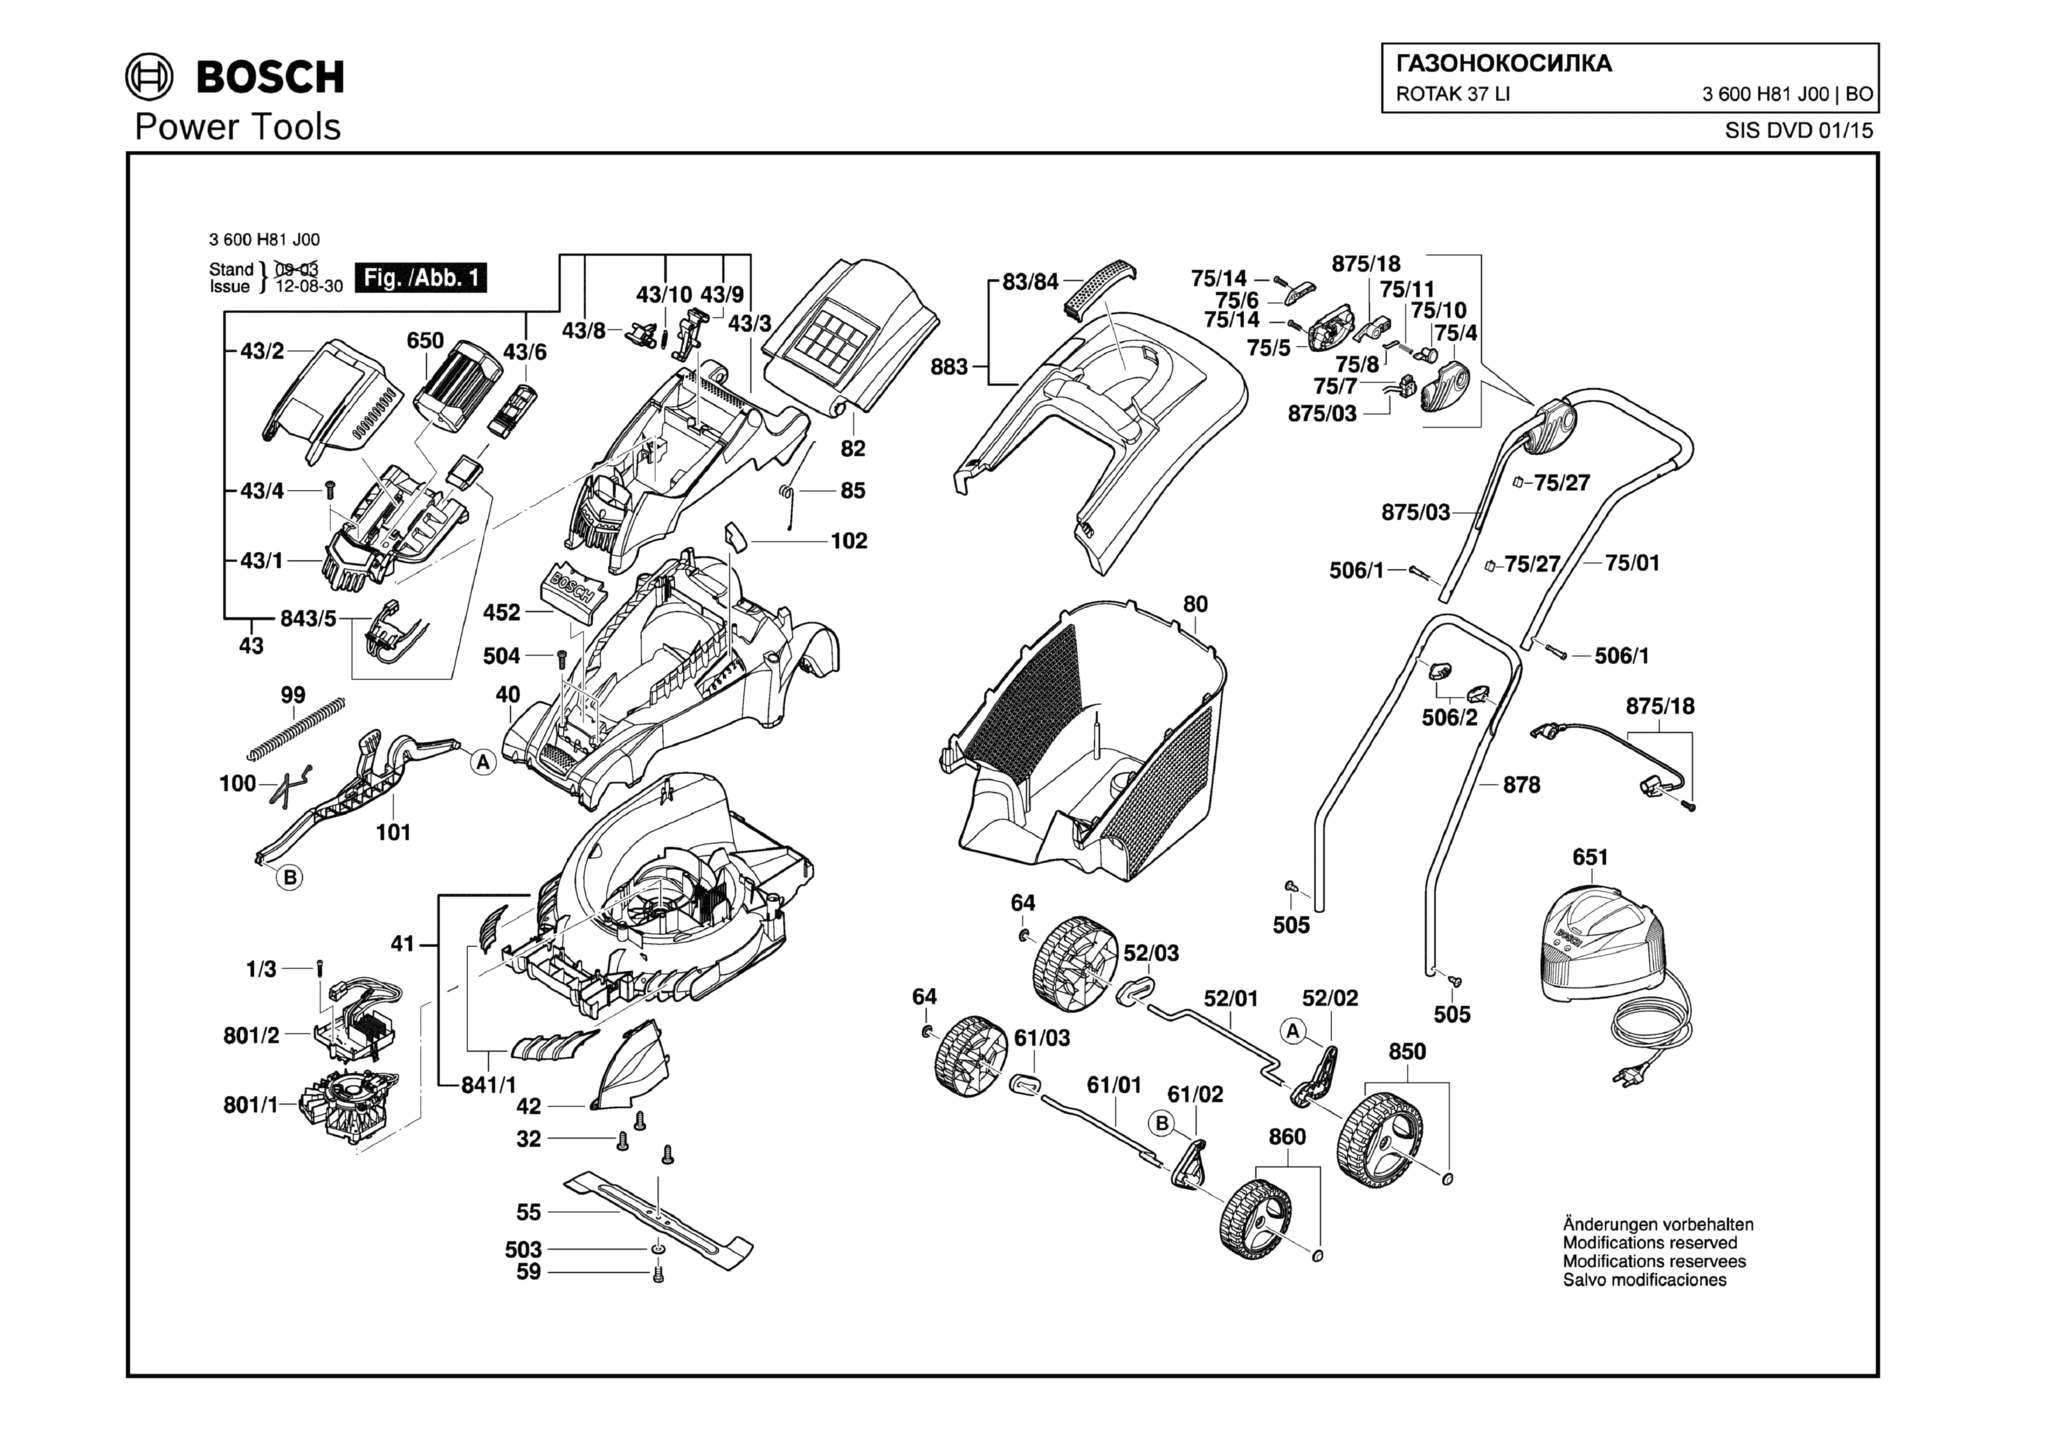 Запчасти, схема и деталировка Bosch ROTAK 37 LI (ТИП 3600H81J00)